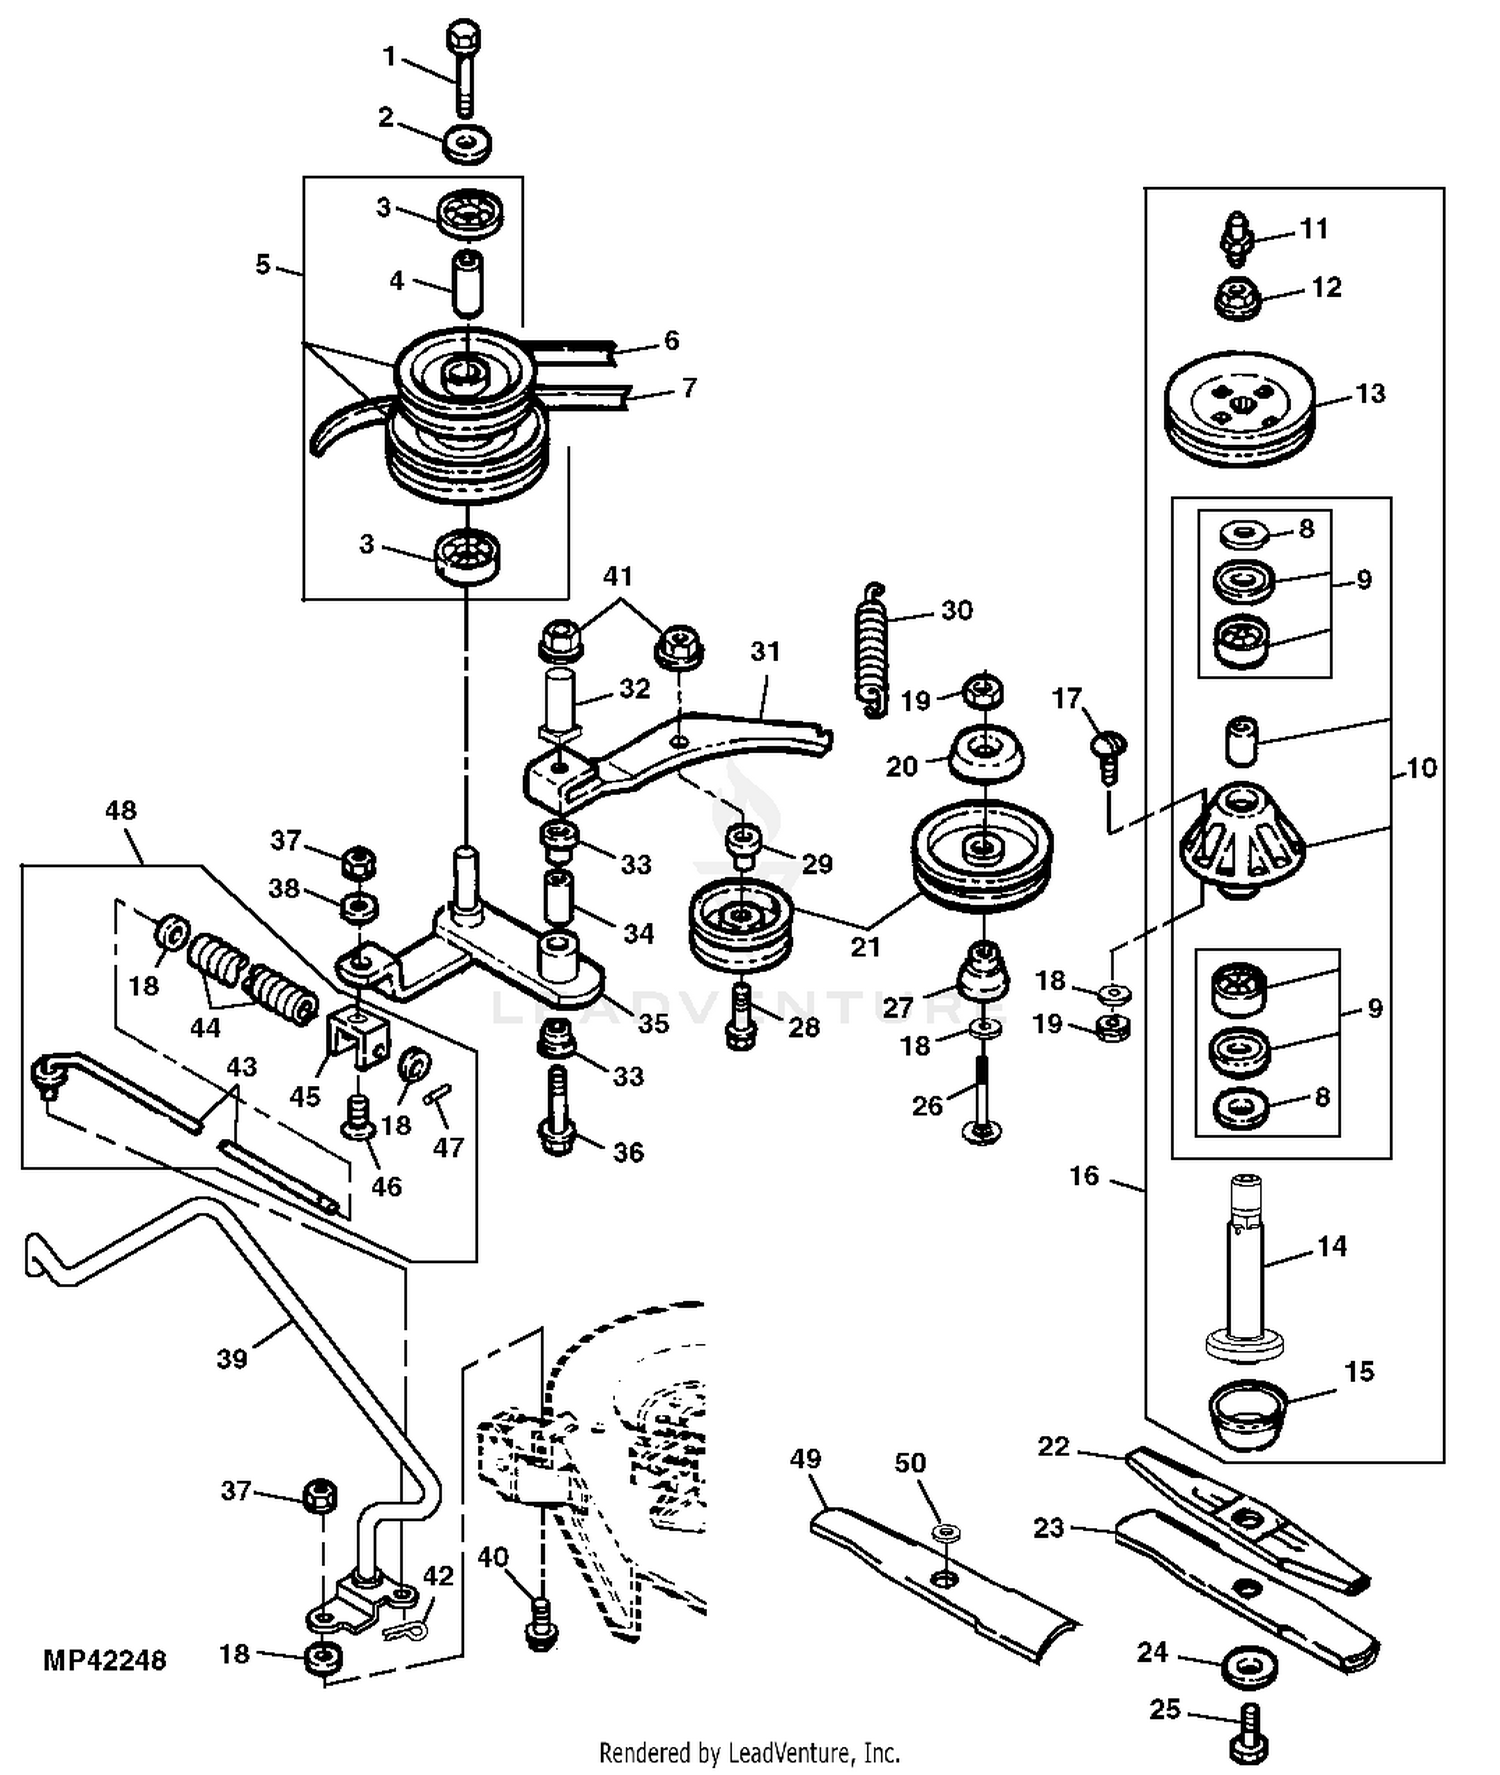 John Deere Gt262 Parts Diagram